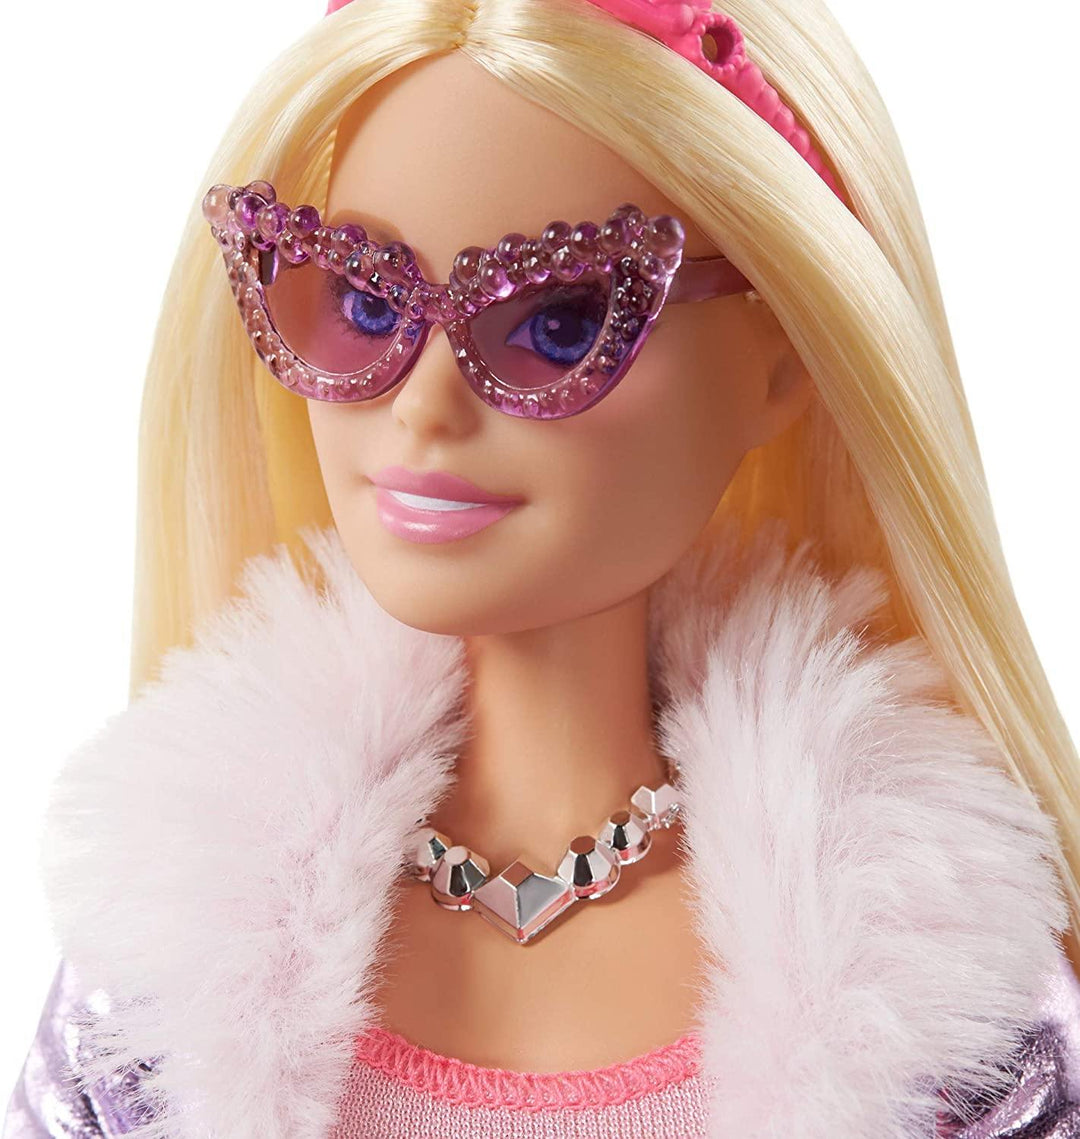 Barbie GML76 Adventure Deluxe Princess Doll - Yachew